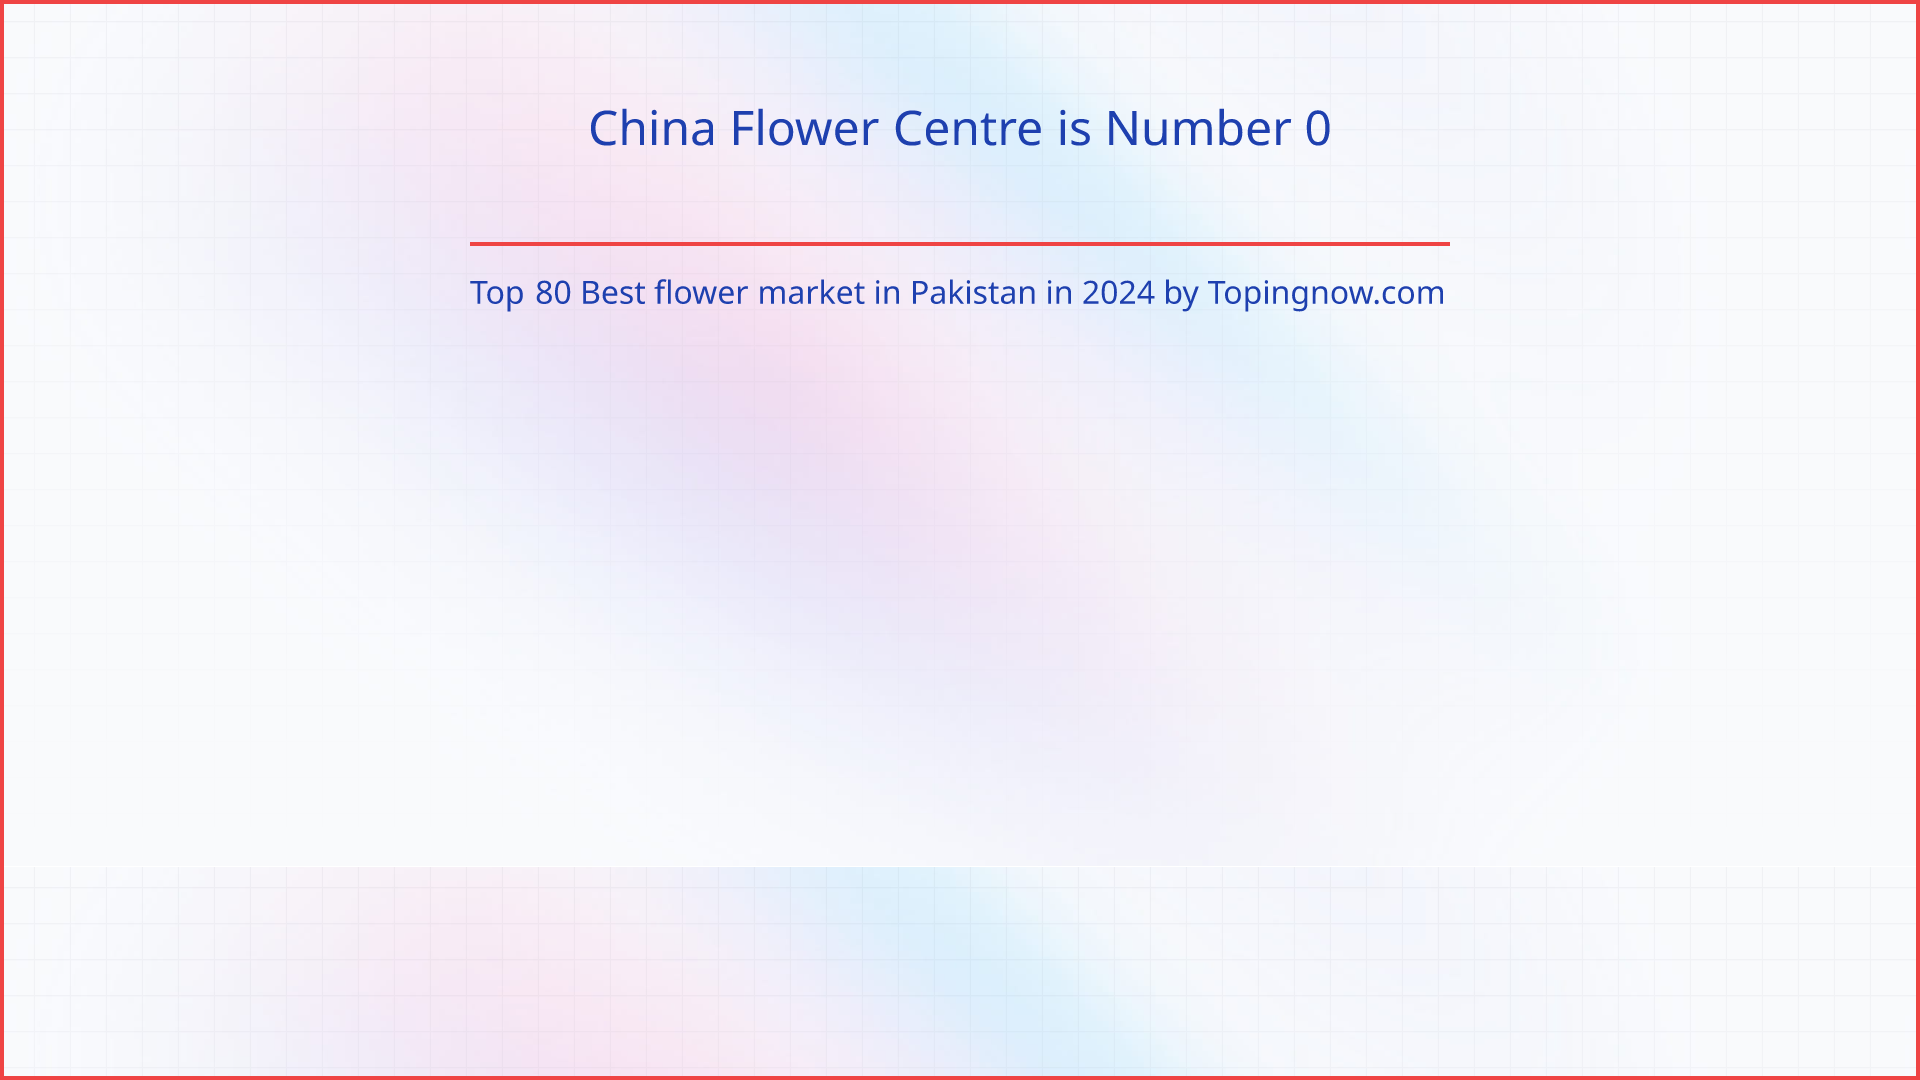 China Flower Centre: Top 80 Best flower market in Pakistan in 2024